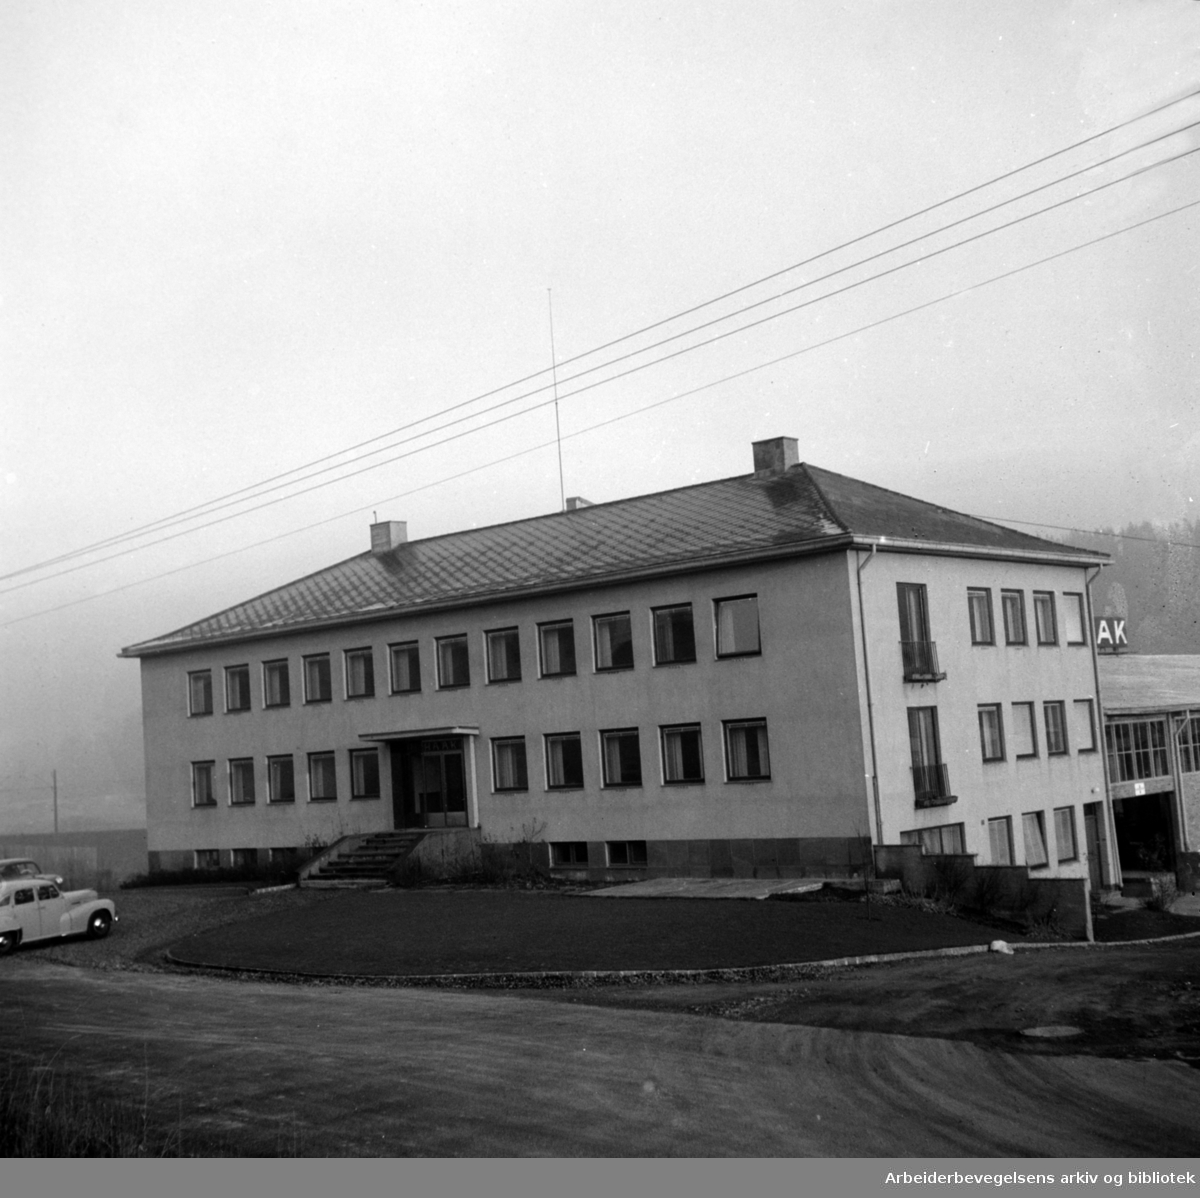 Teisen. Haak & Co. November 1955